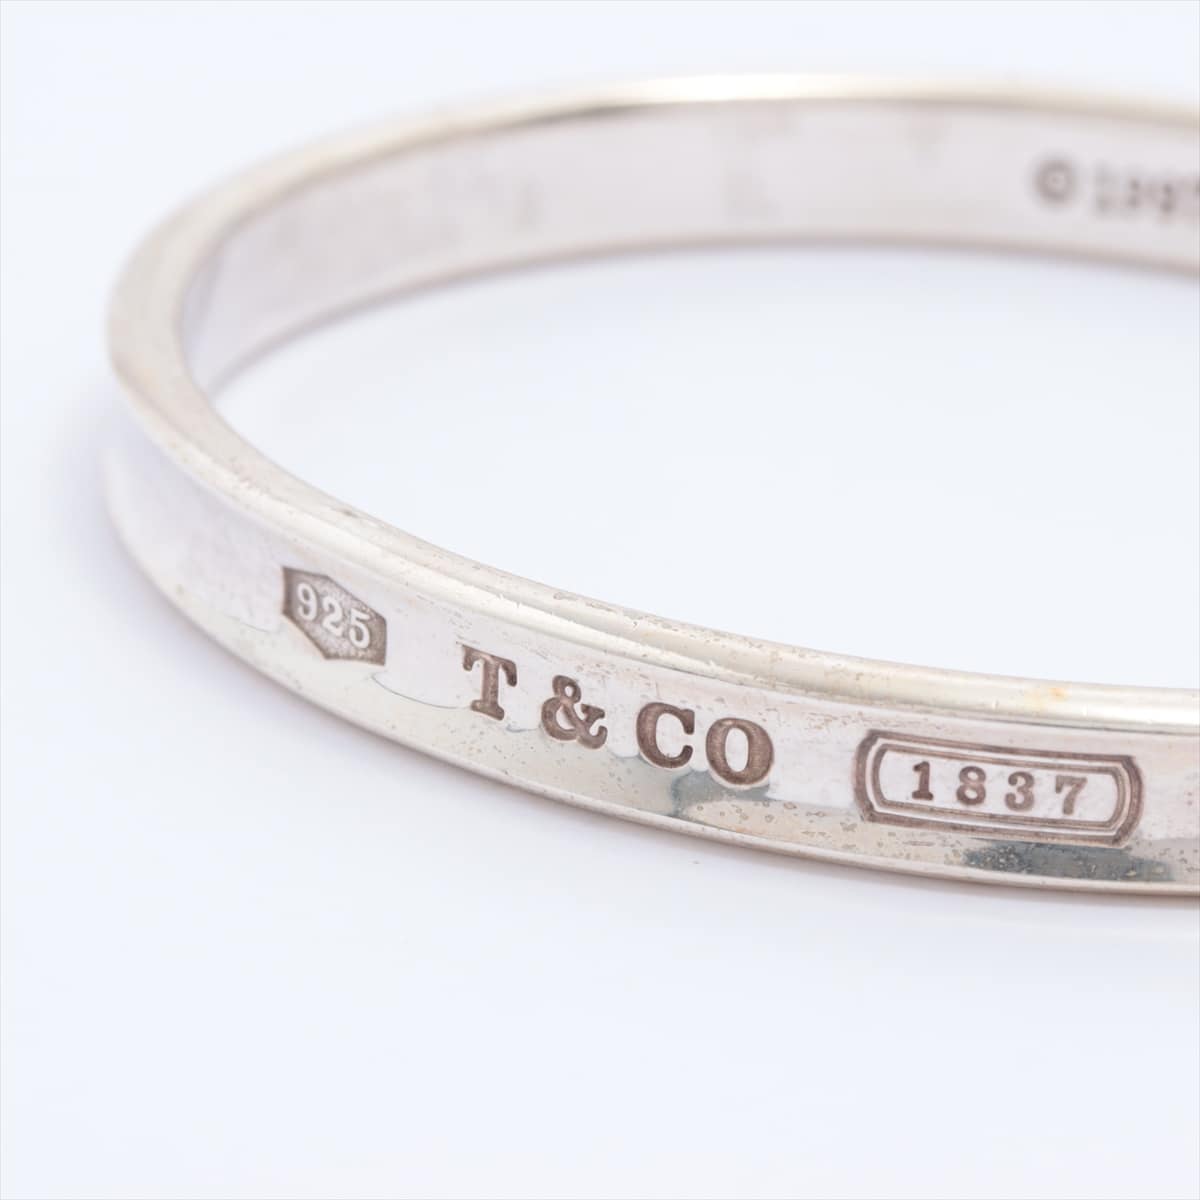 Tiffany 1837 Narrow Bangle 925 30.8g Silver